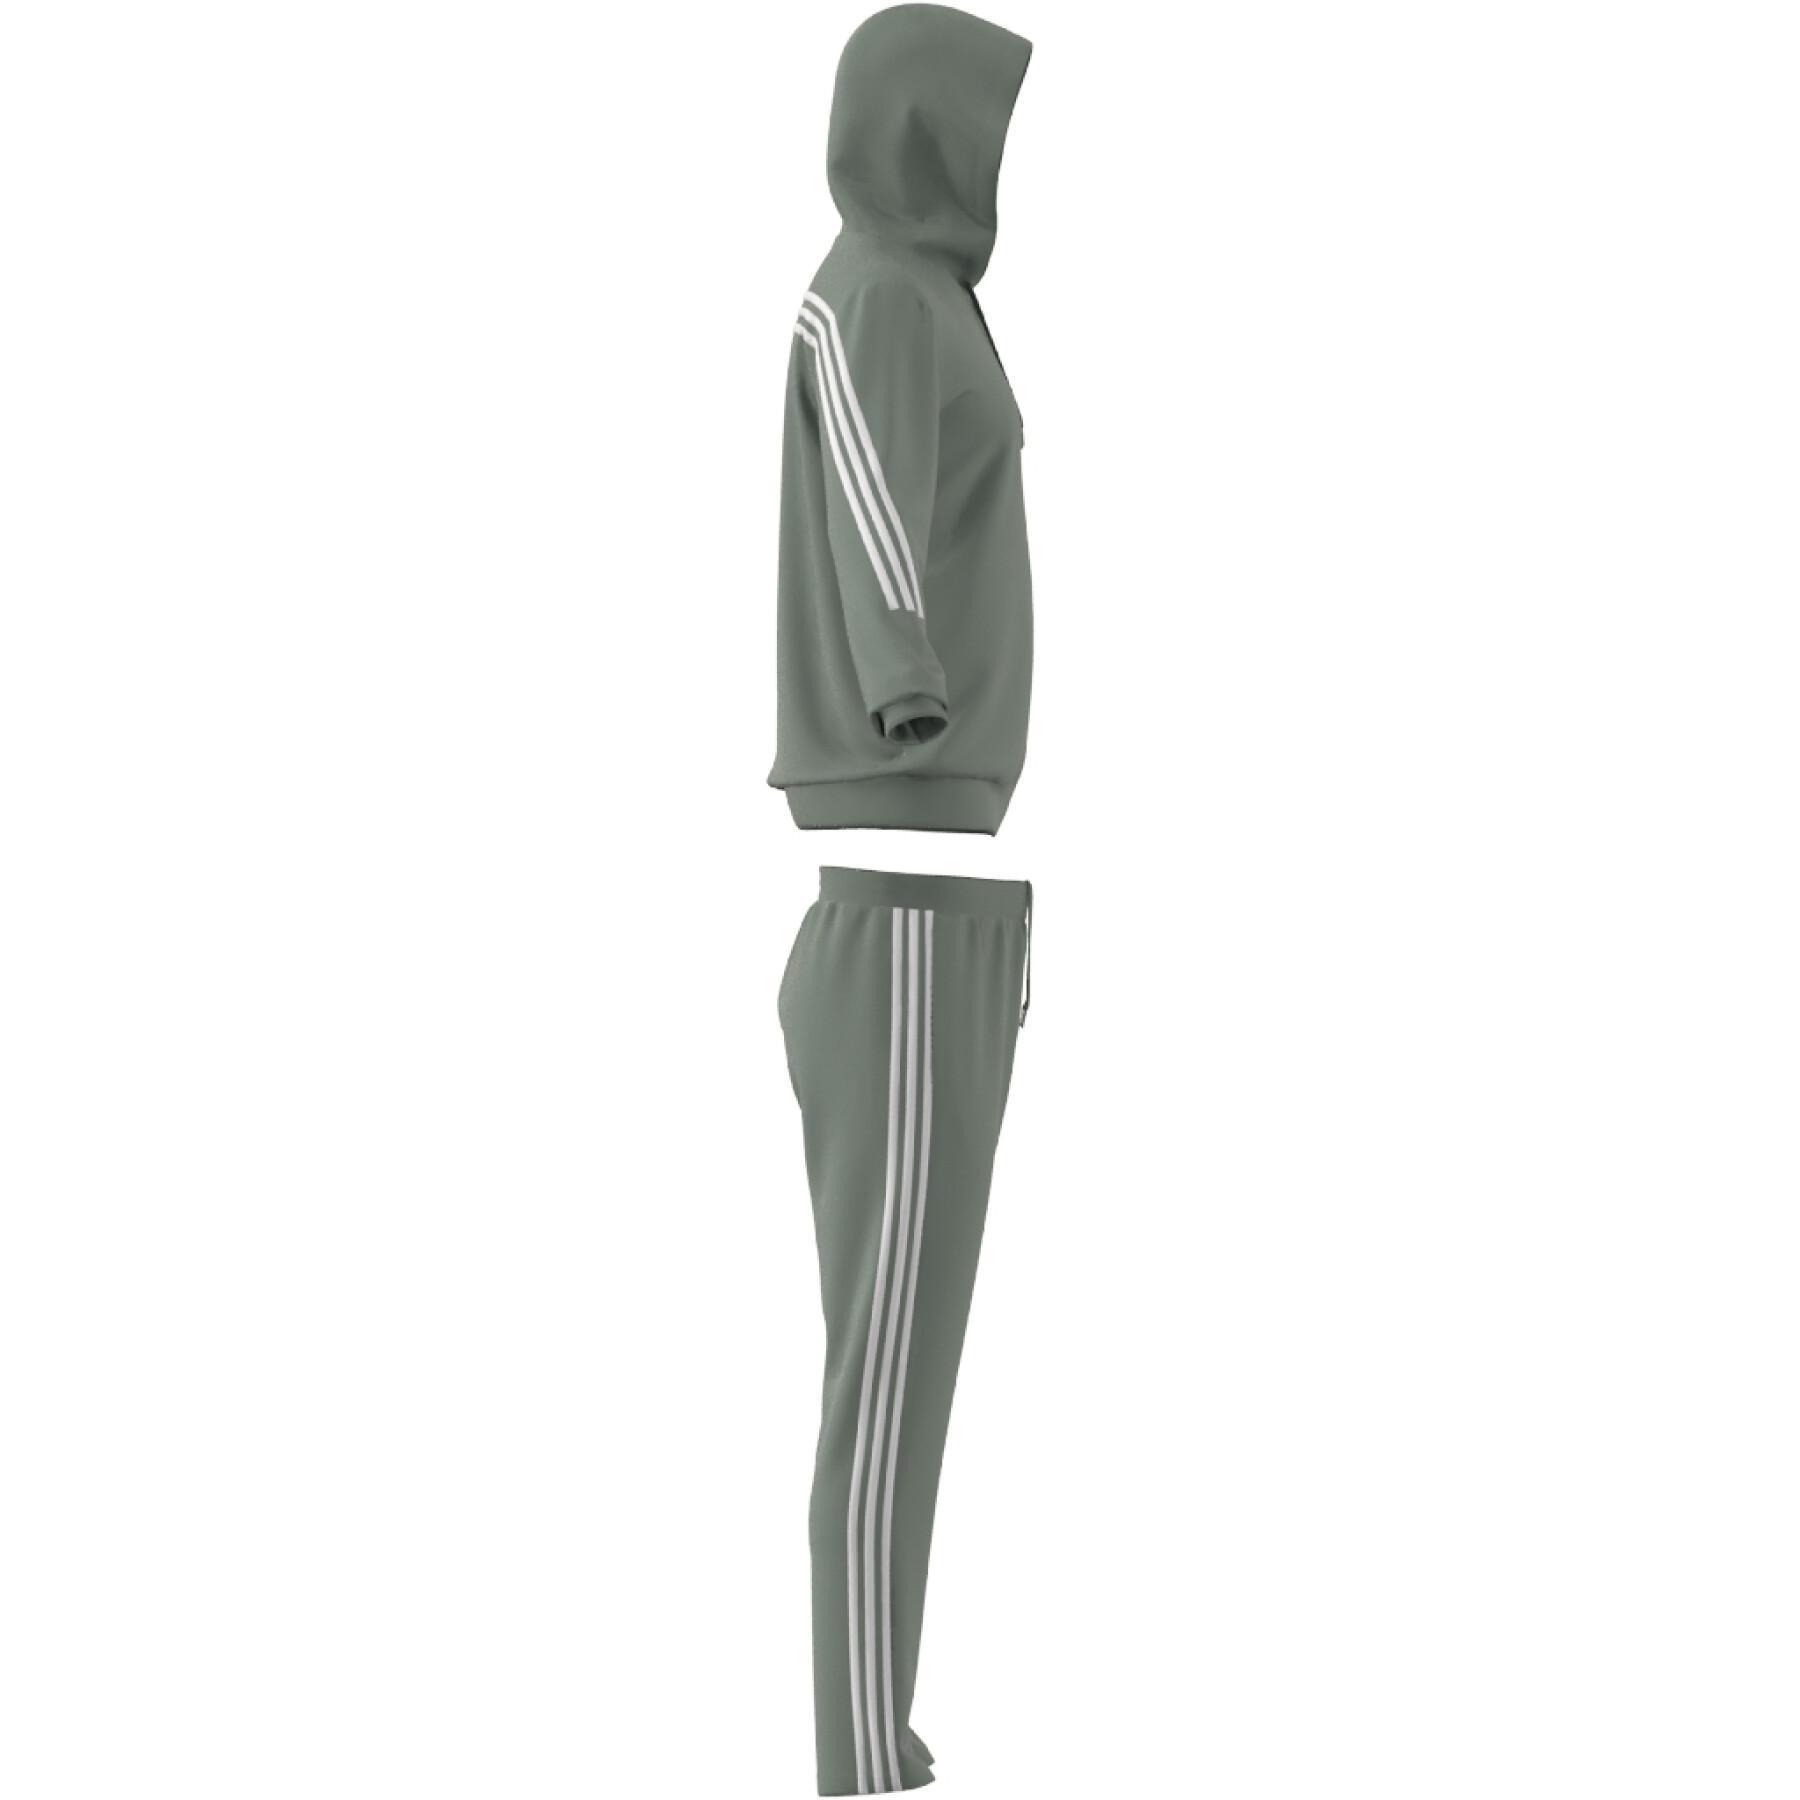 Trainingsanzug adidas 3-Stripes